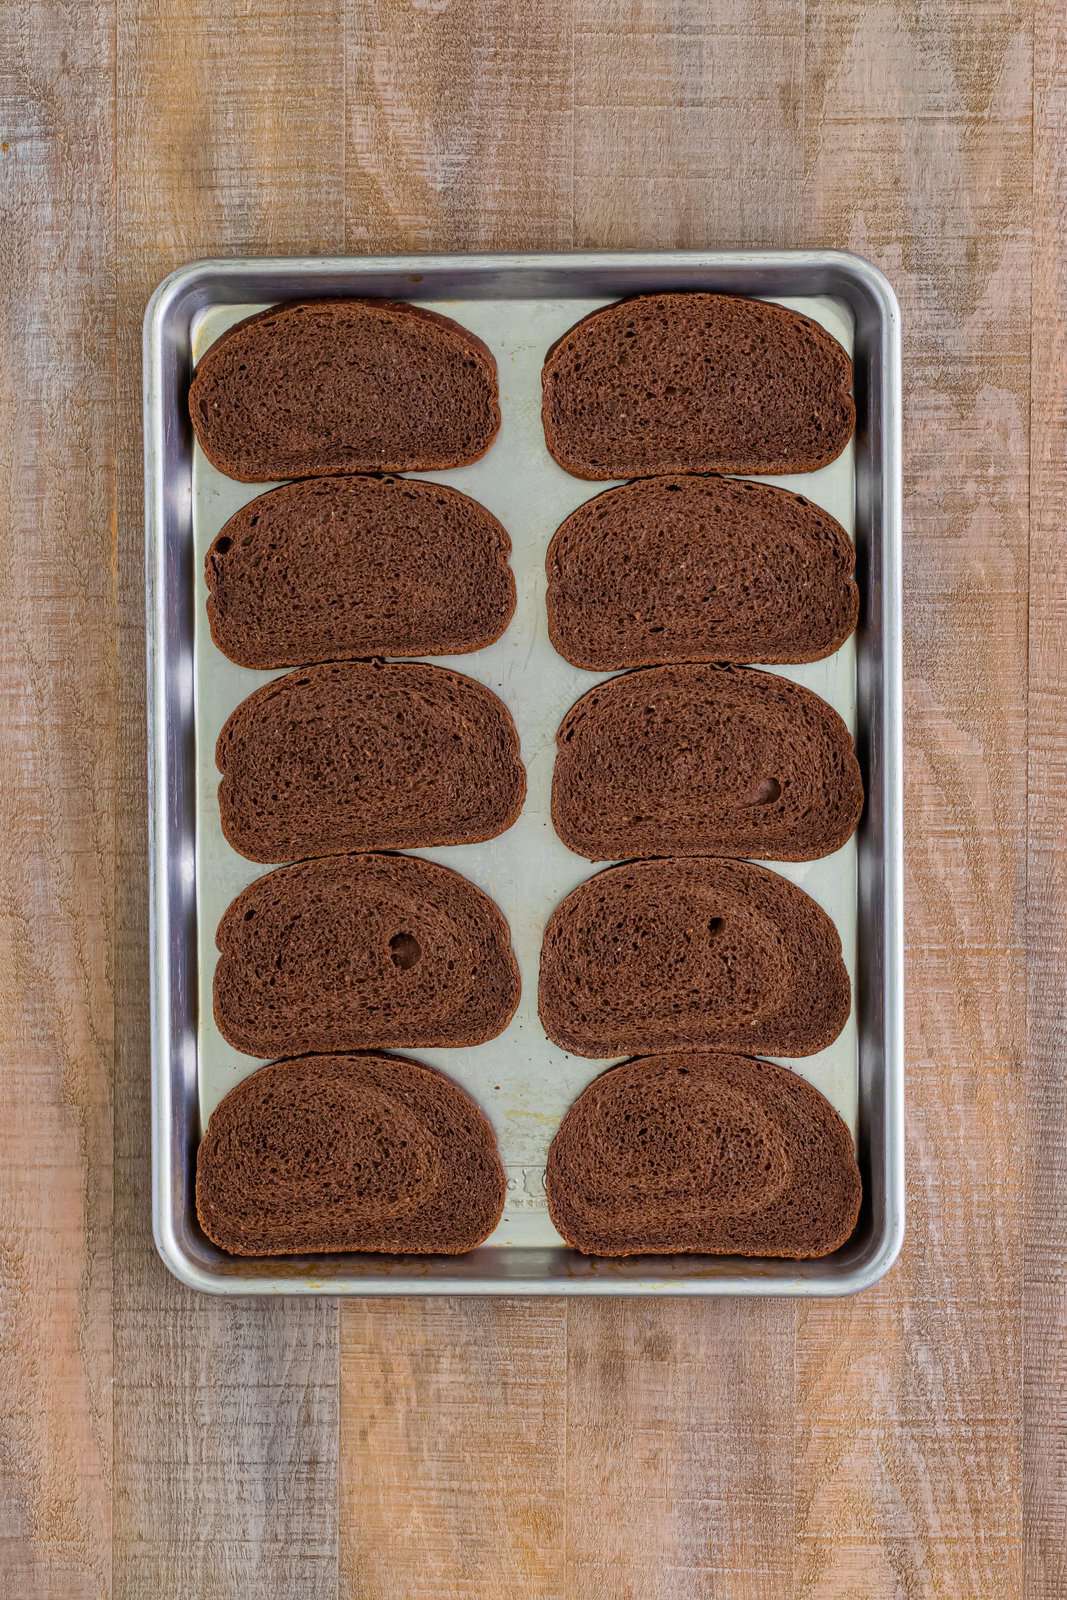 A baking sheet with ten pieces of pumpernickel bread.